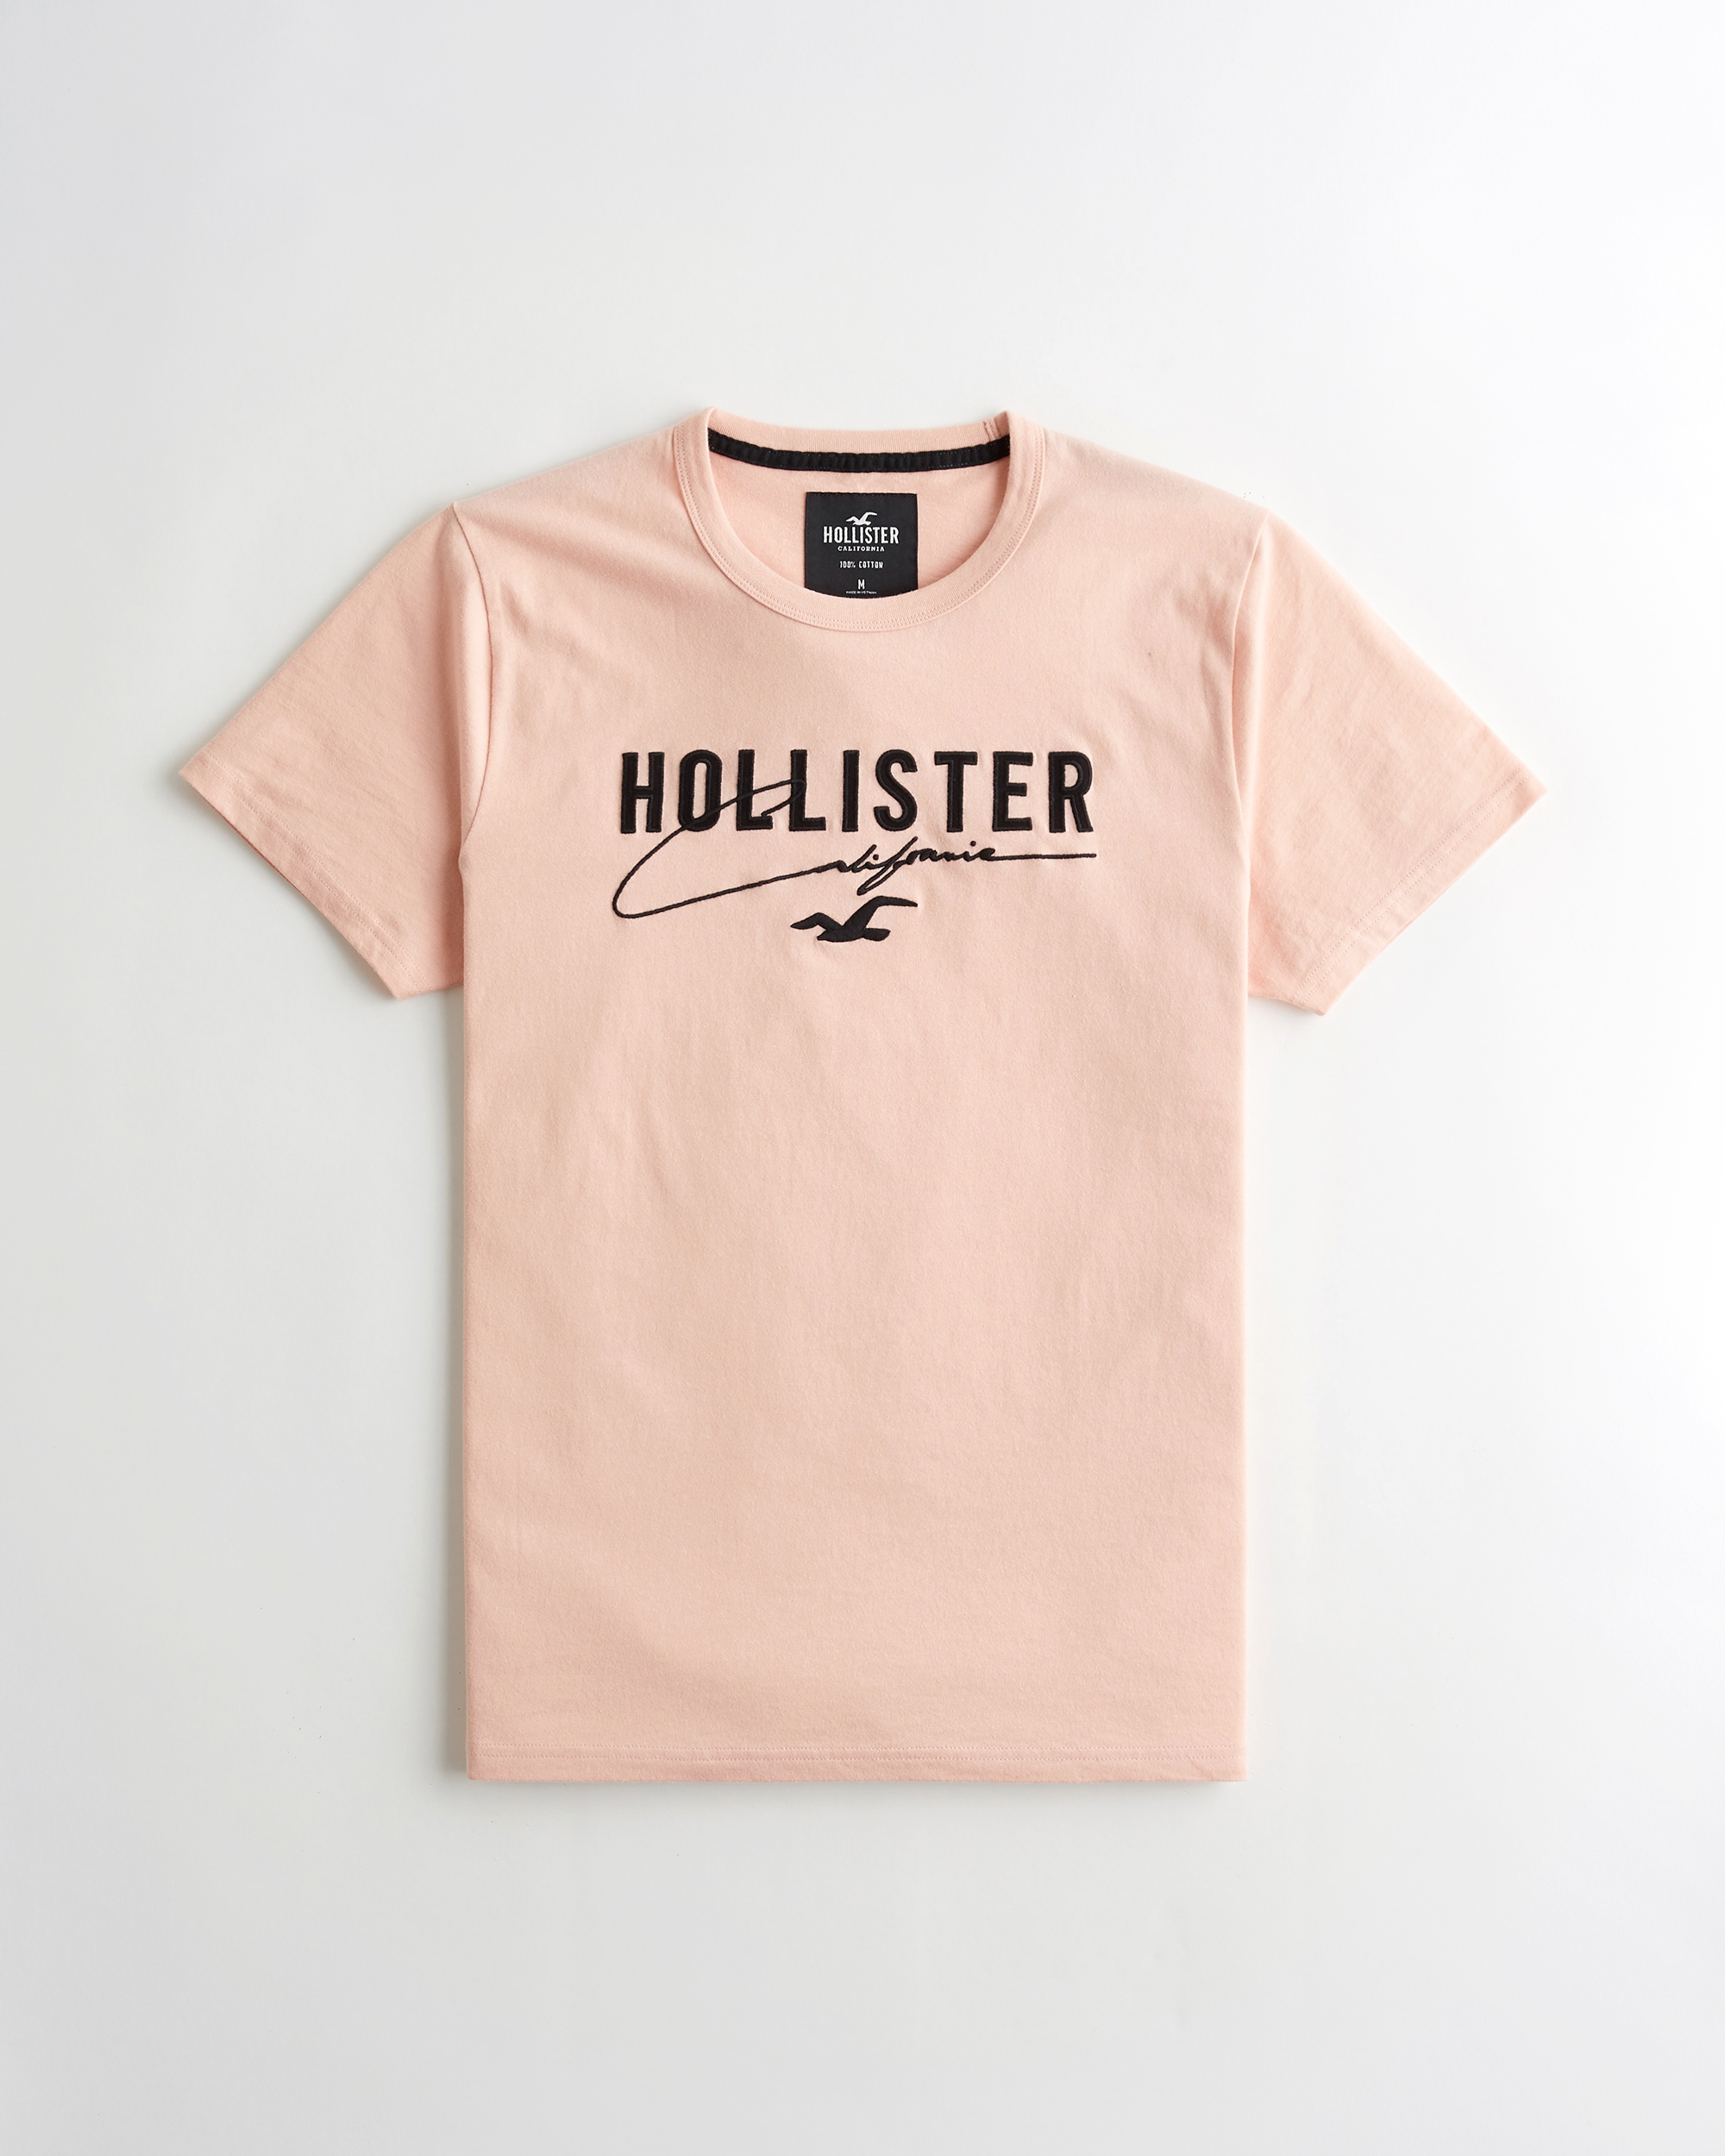 hollister boys shirts